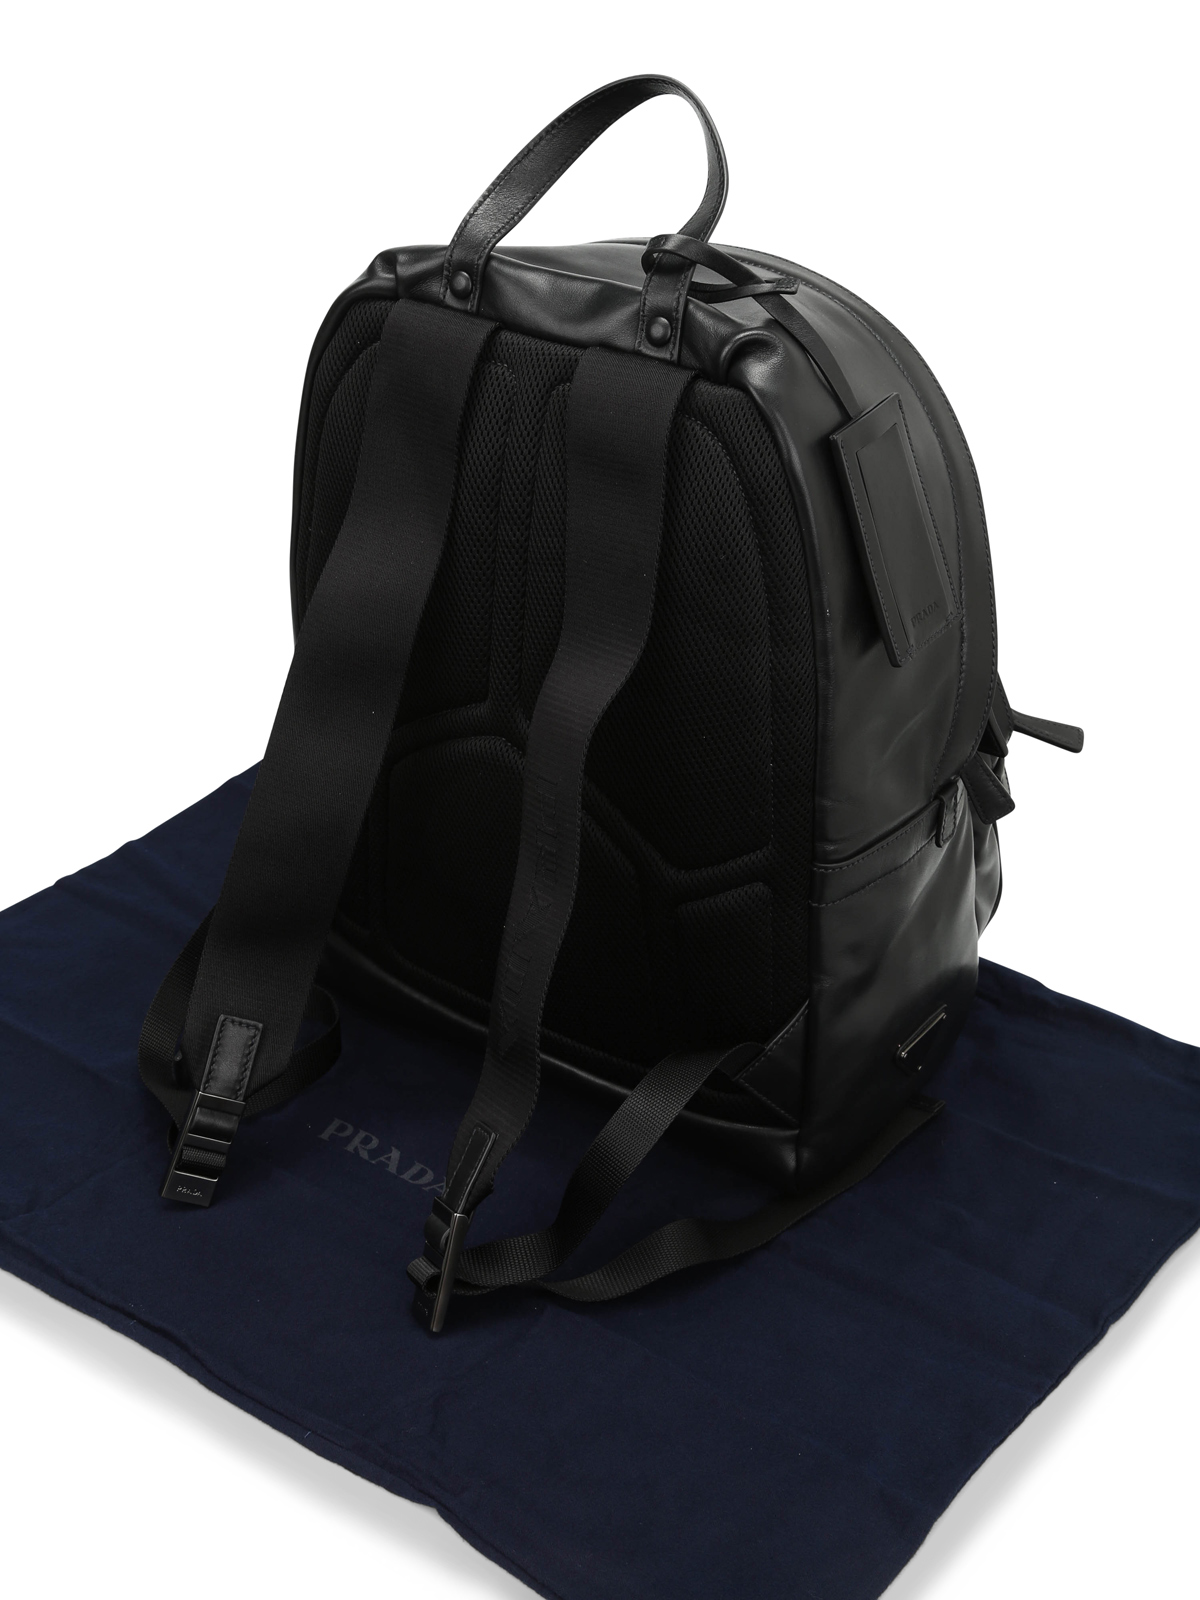 Backpacks Prada - Sporty chic leather backpack - 2VZ066ASKF000200